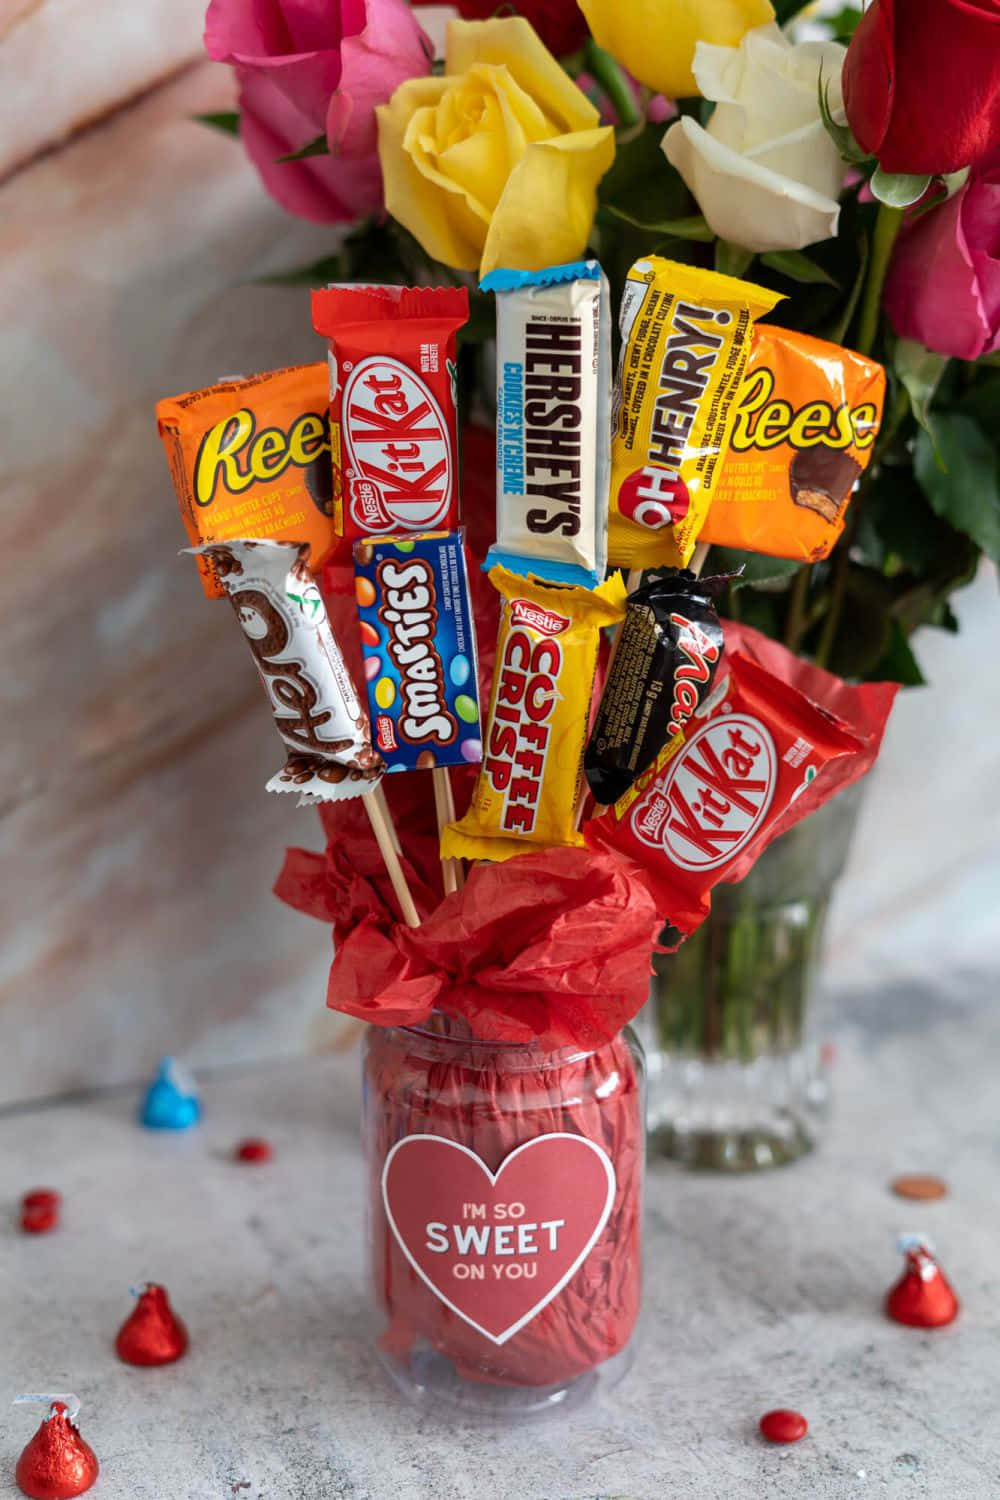 Valentine's Day Candy Bouquet